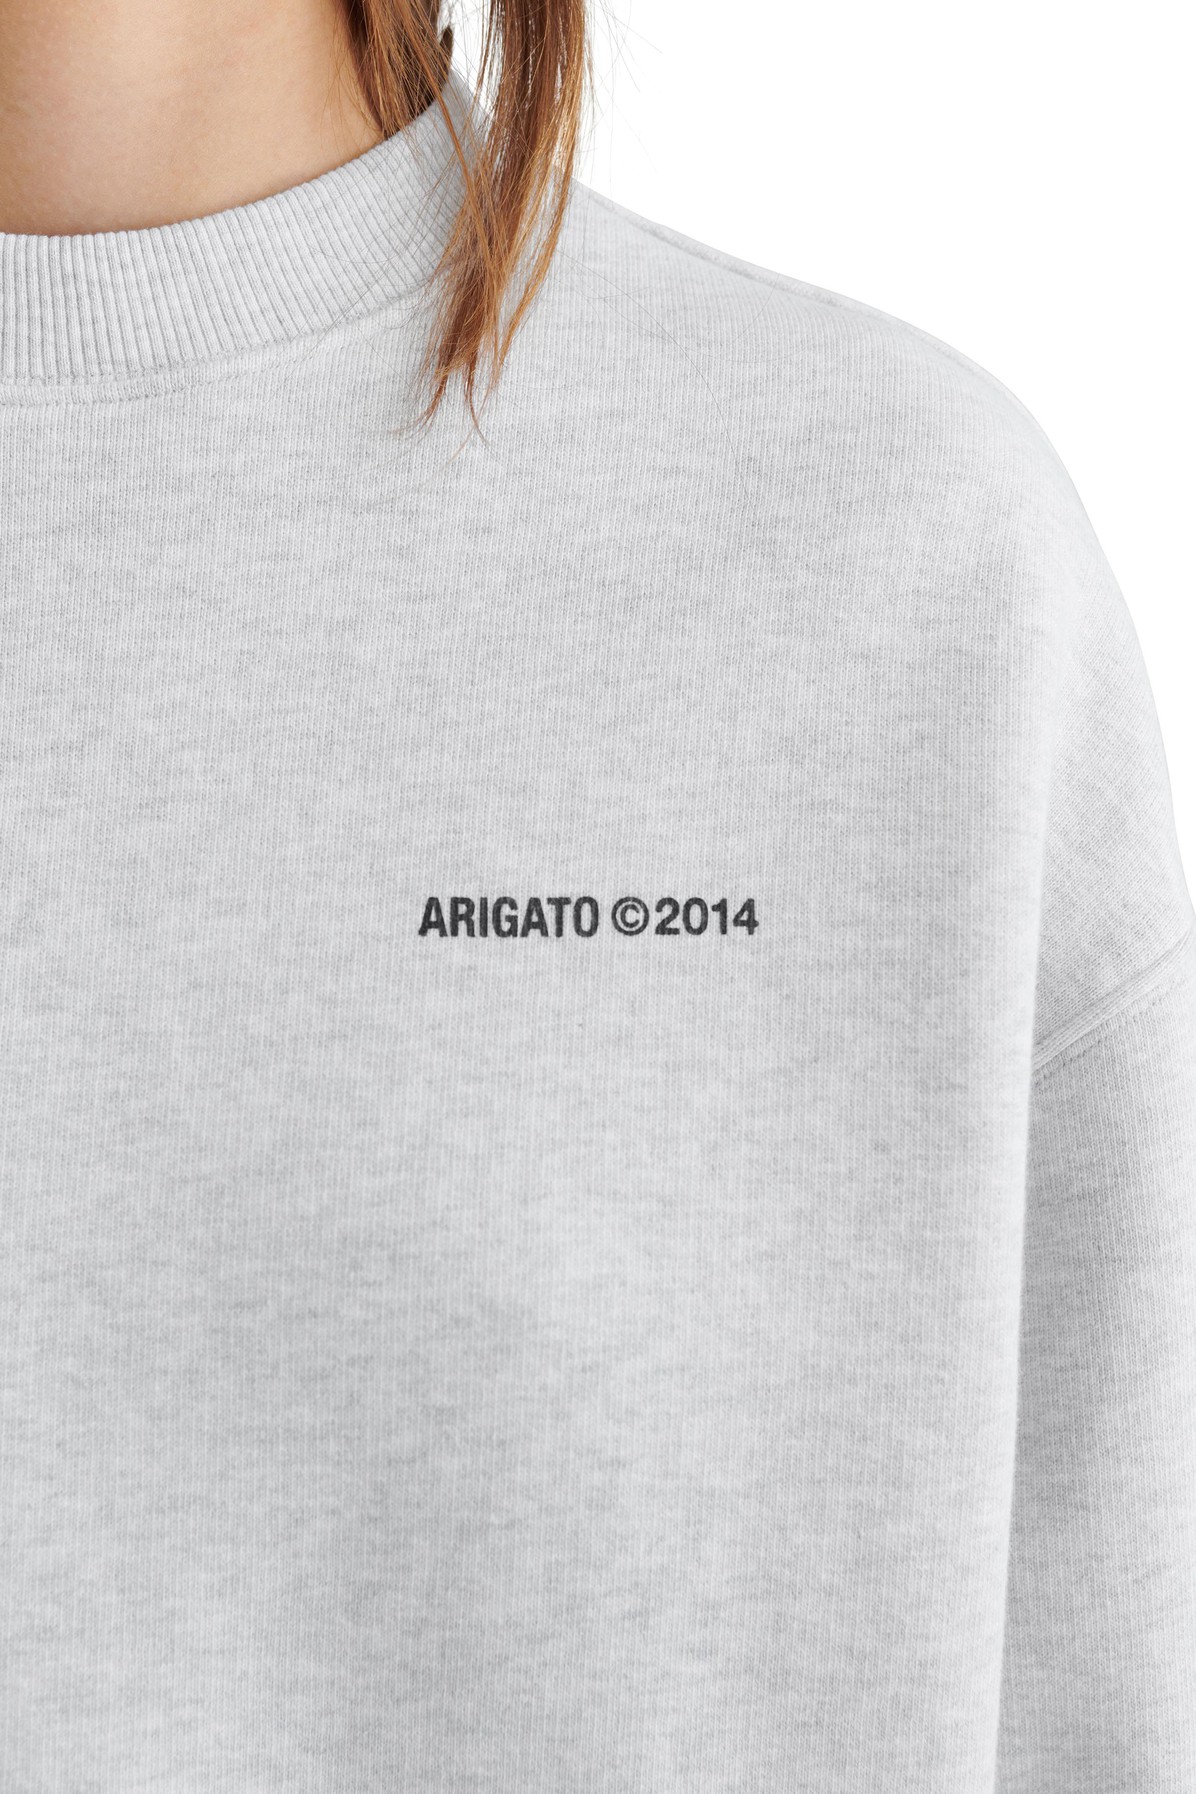 Axel Arigato: Off-White Monogram Sweatshirt